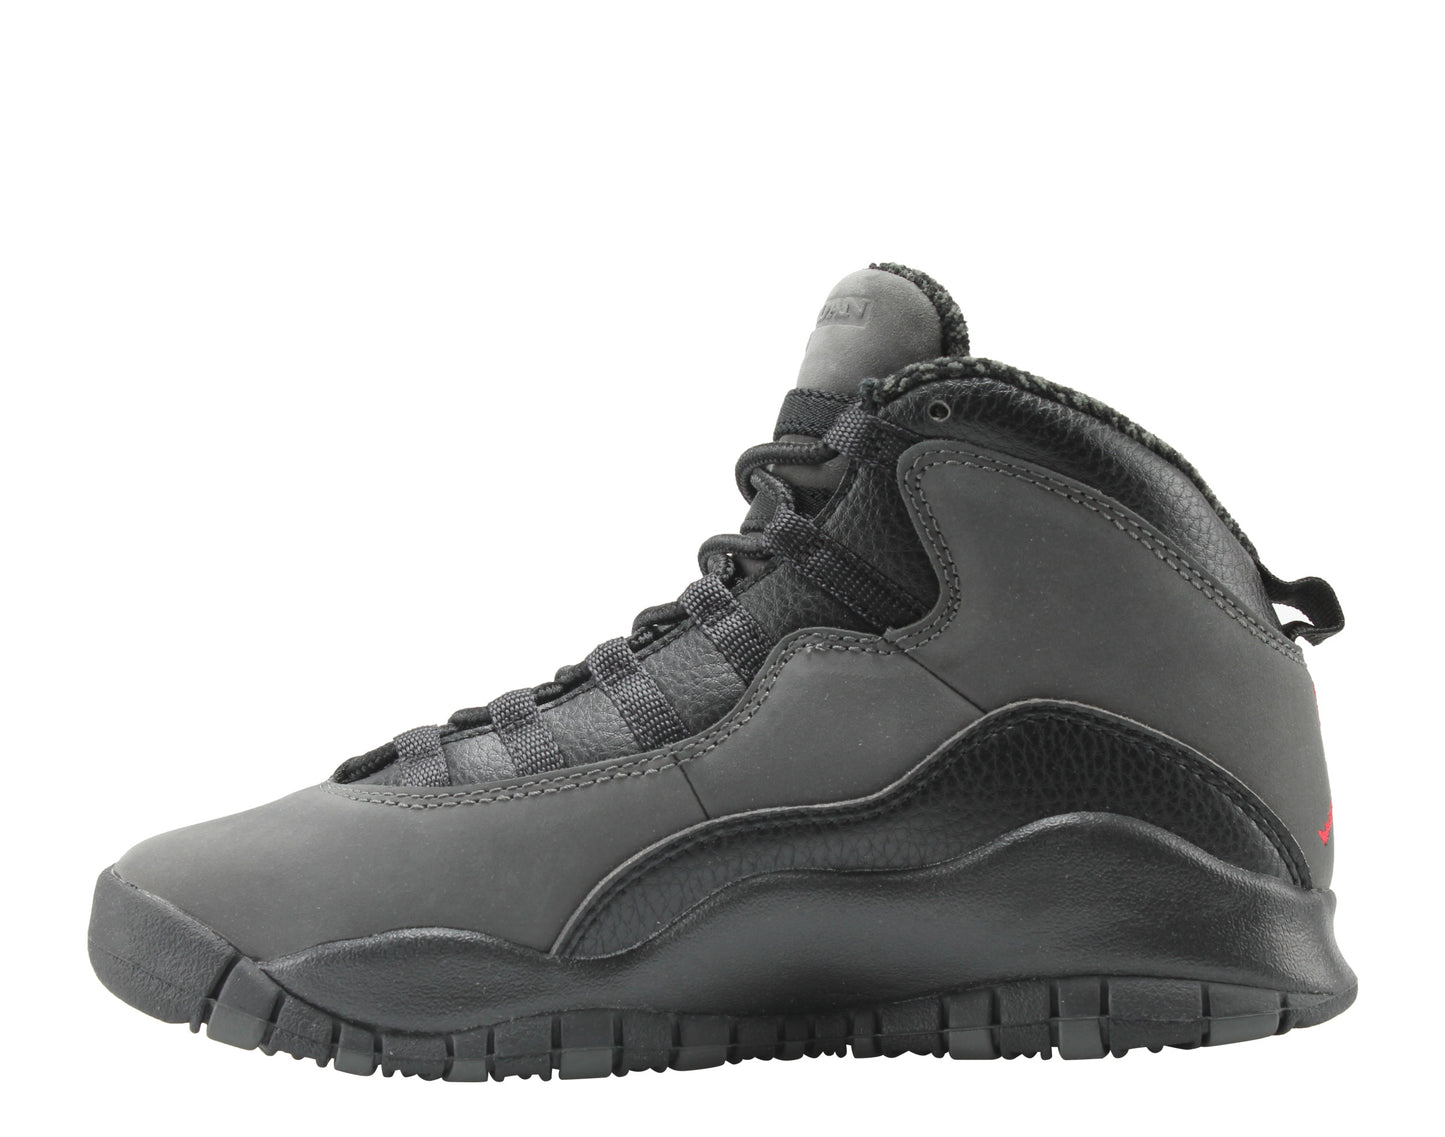 Nike Air Jordan 10 Retro (GS) BG Dark Shadow Boys Basketball Shoes 310806-002